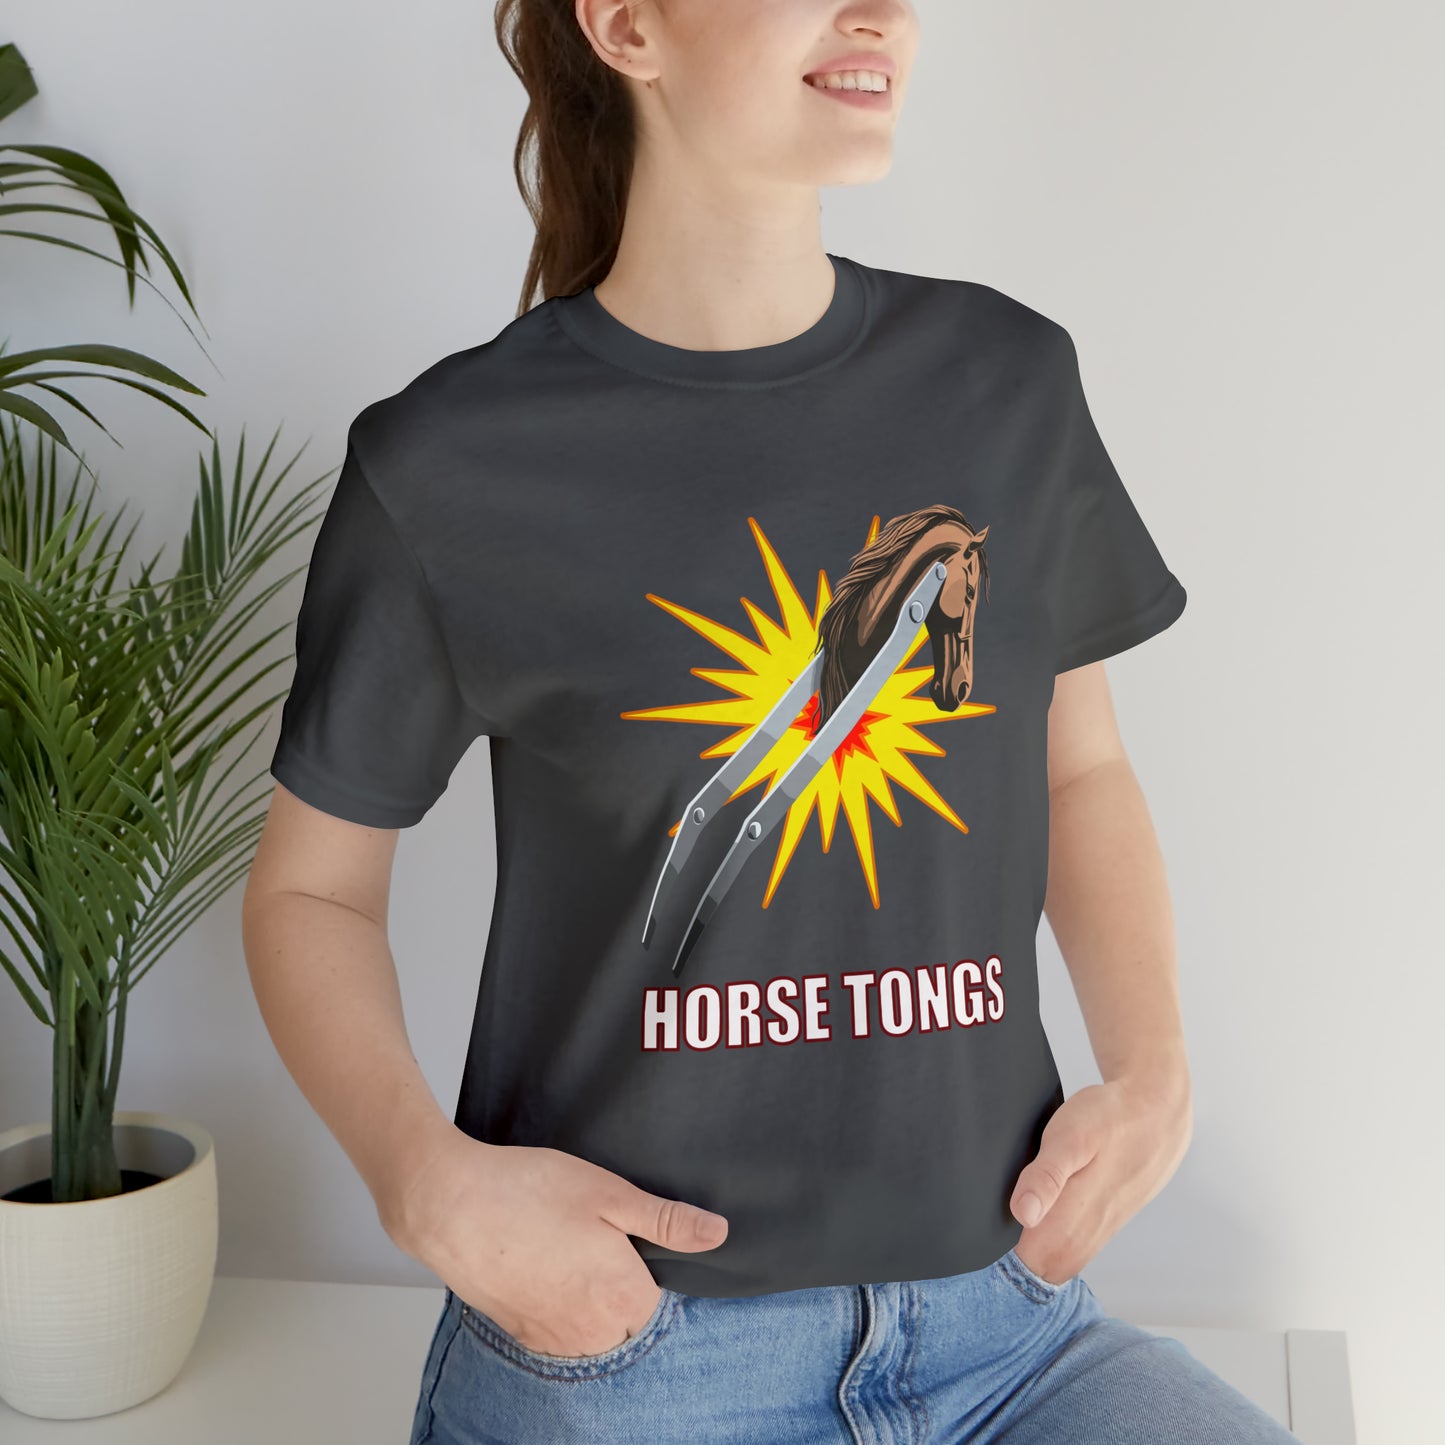 Horse Tongs (military grade)